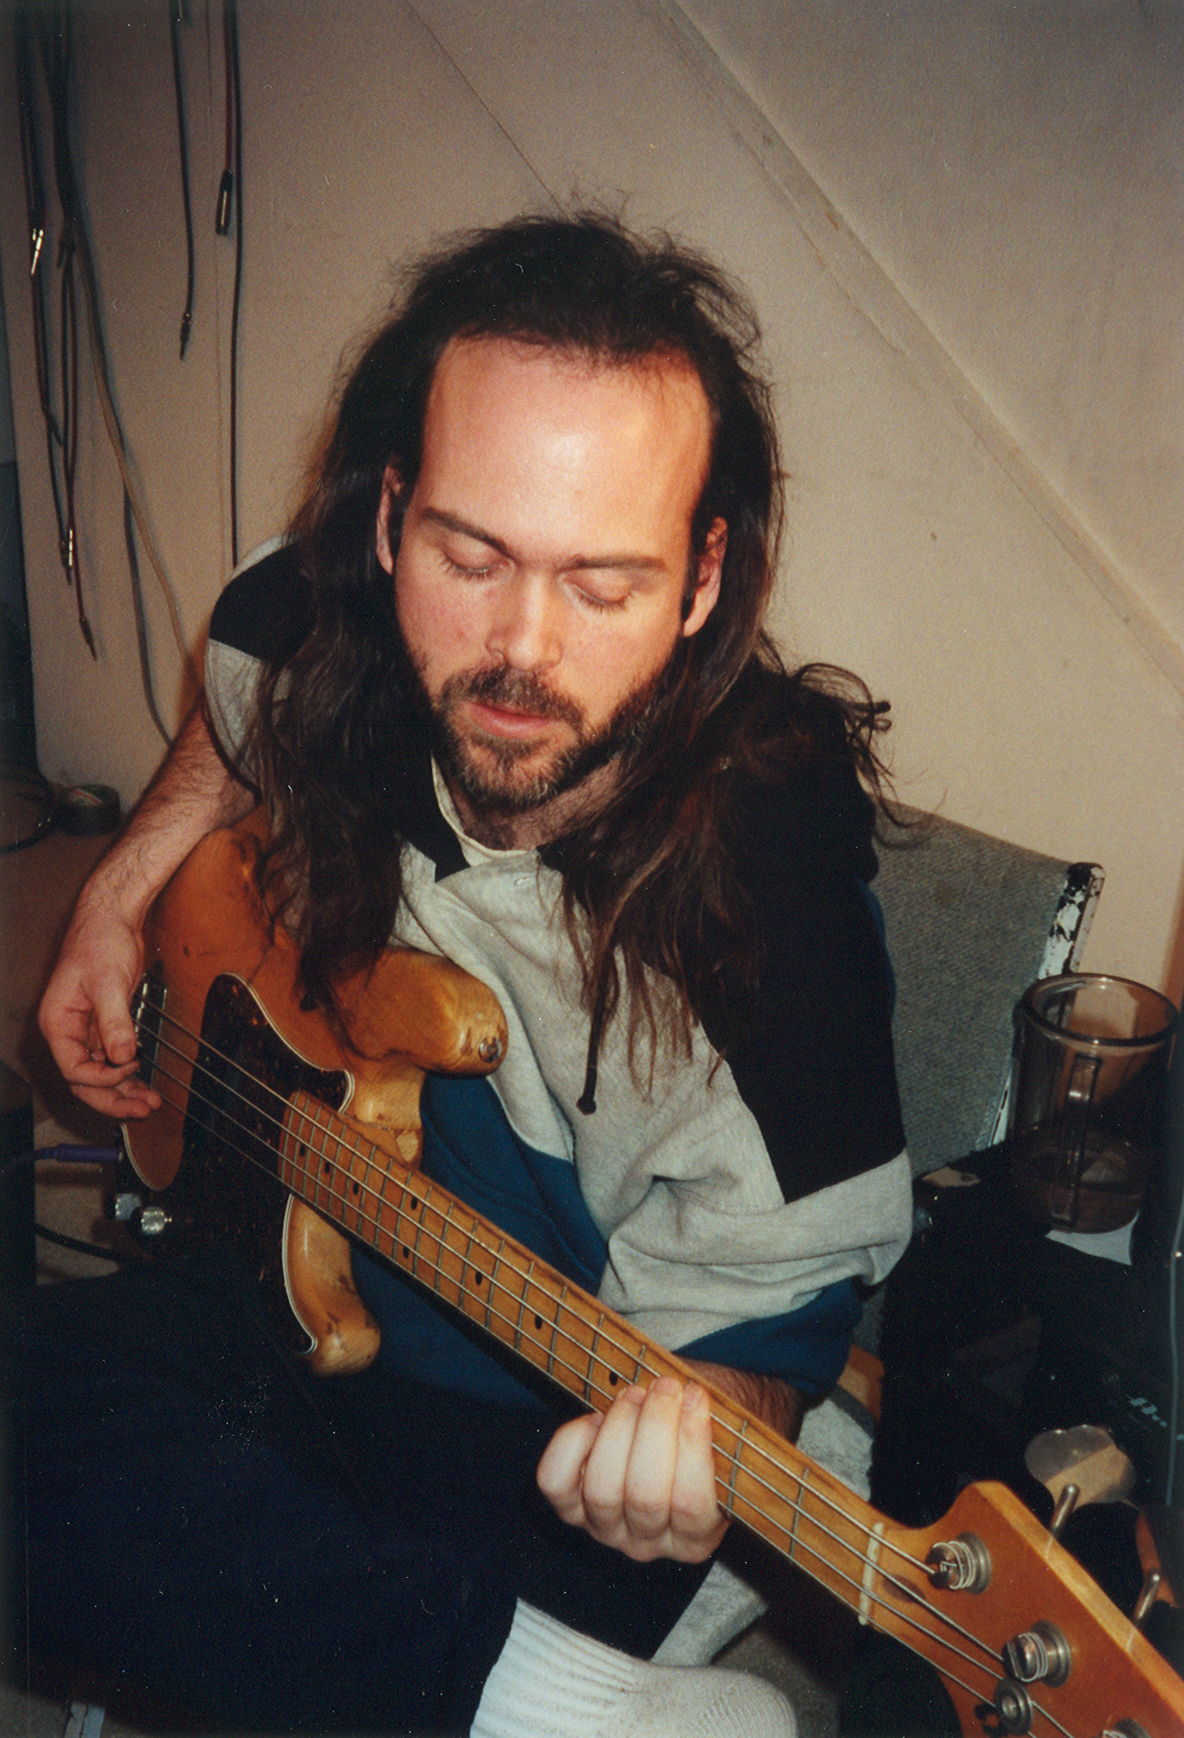 Corben - on bass